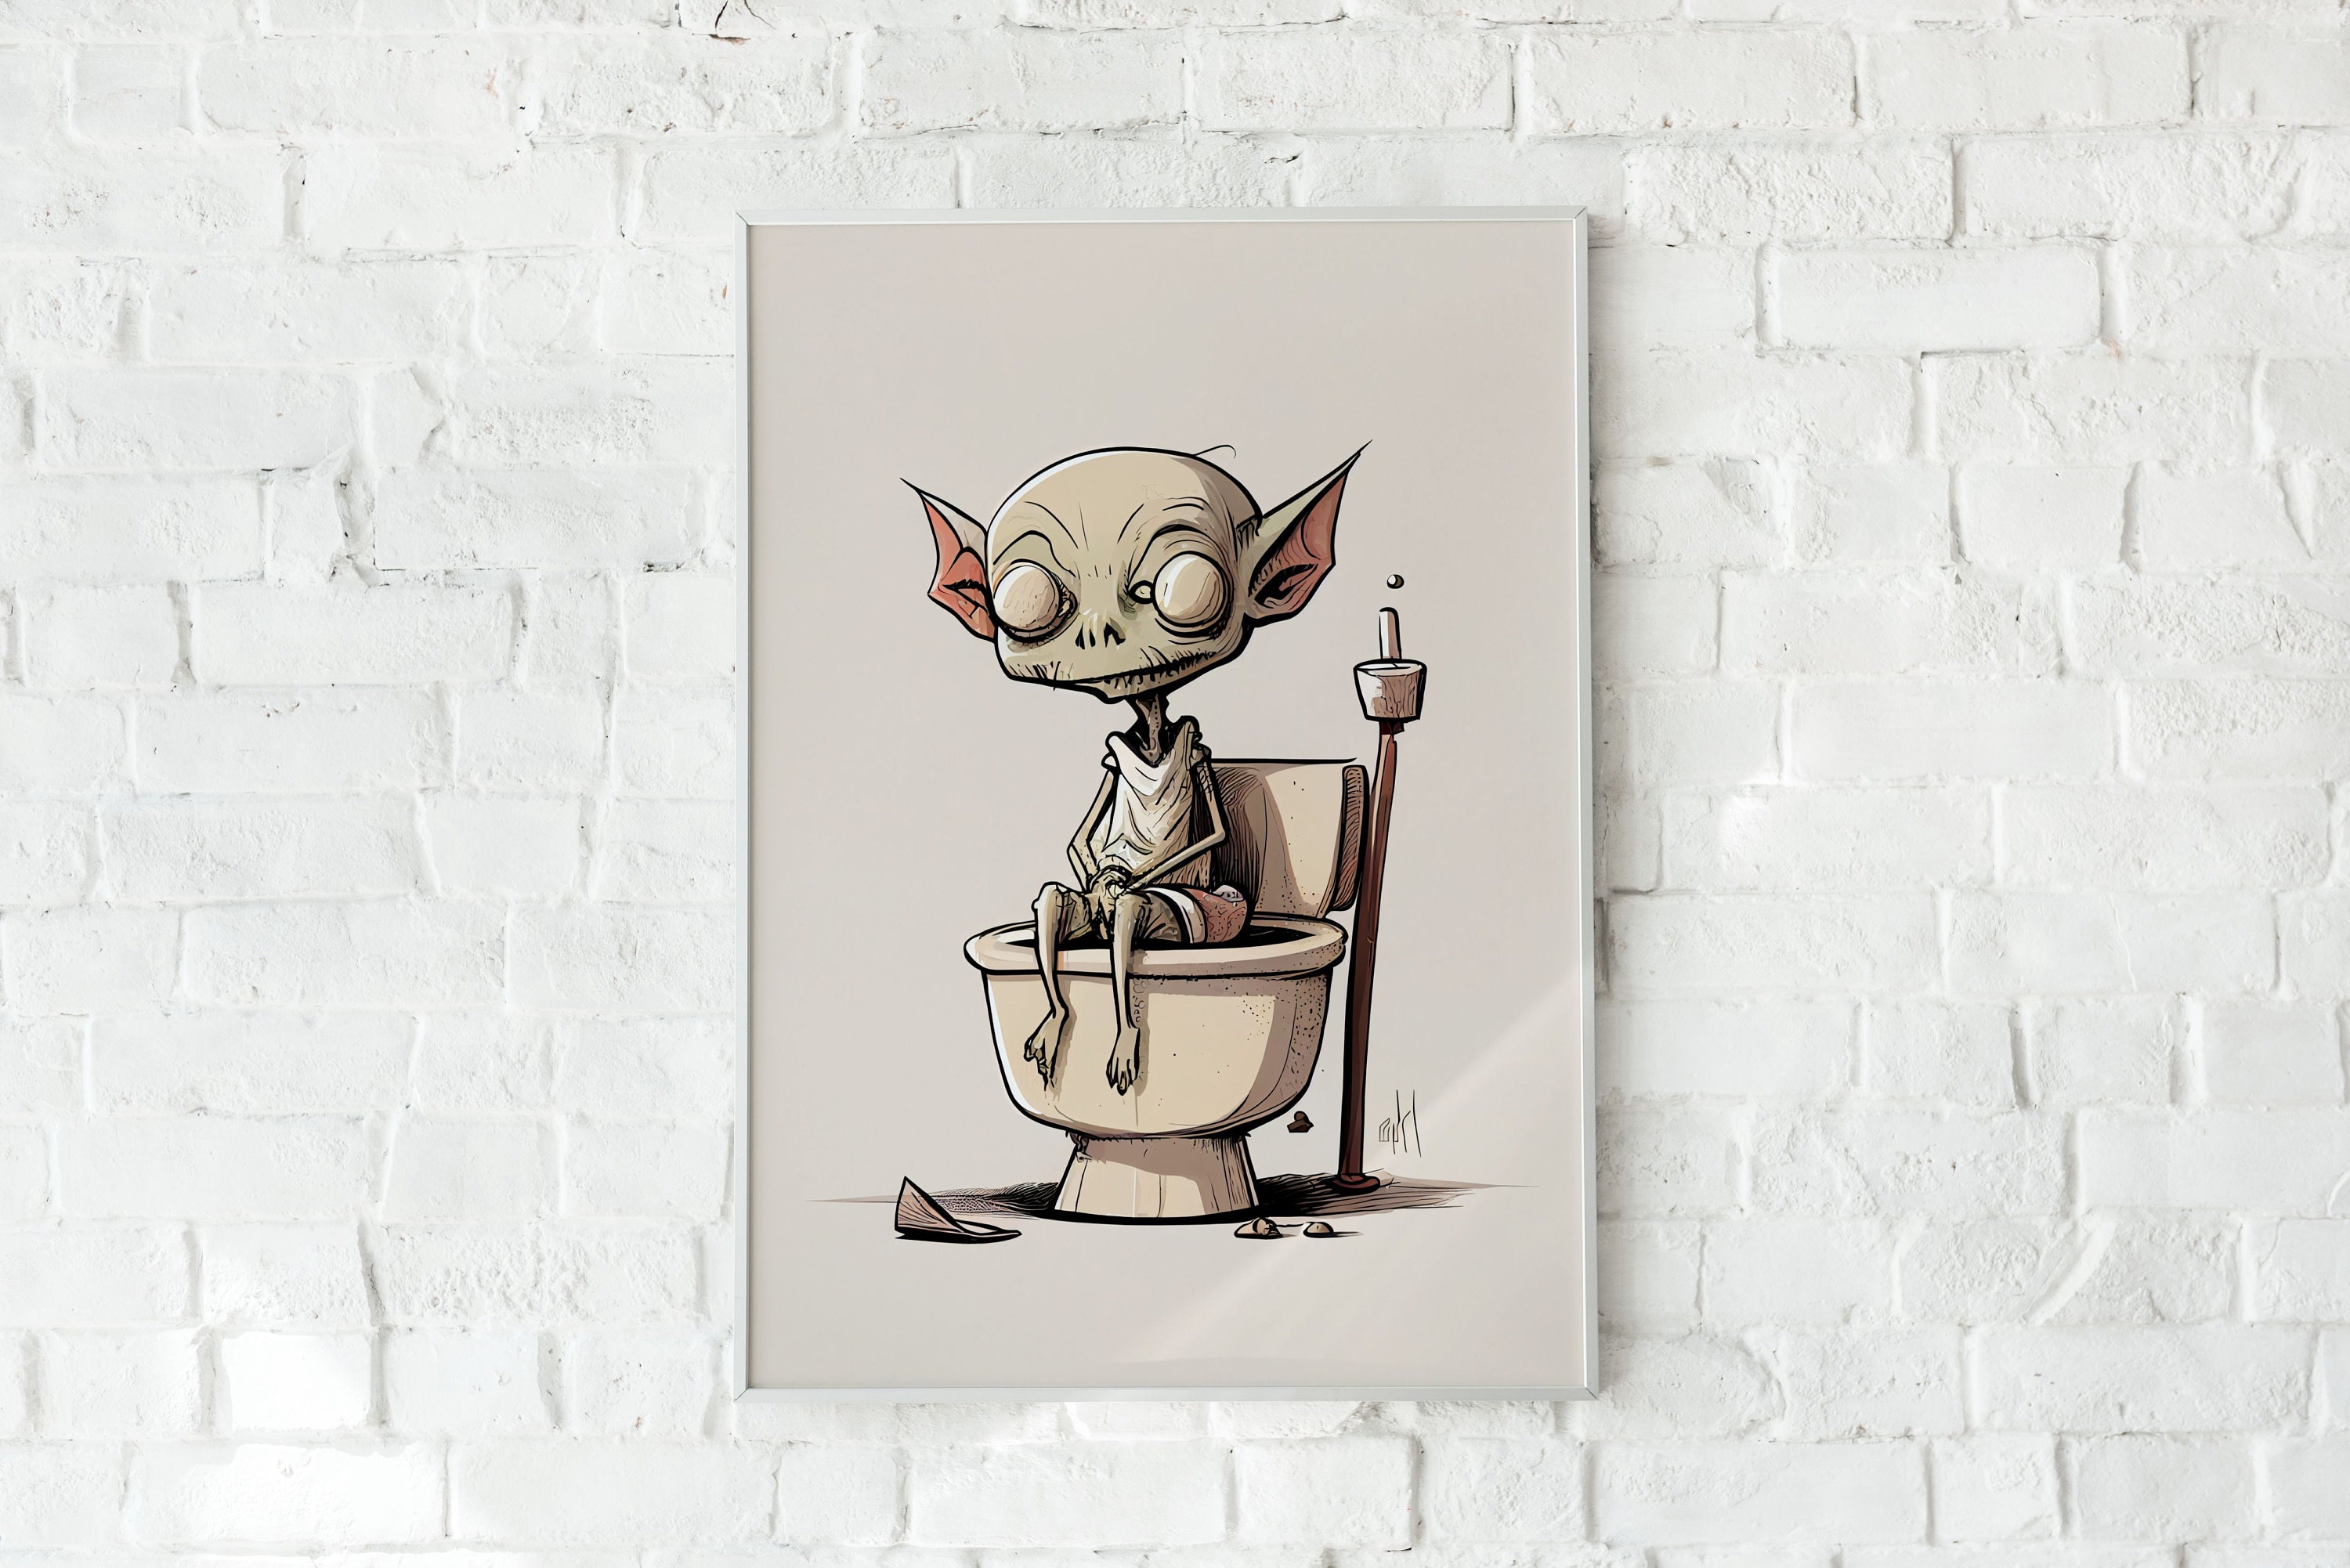 Goblin Sitting on Toilet Funny Art Wall Decor Bathroom Decor